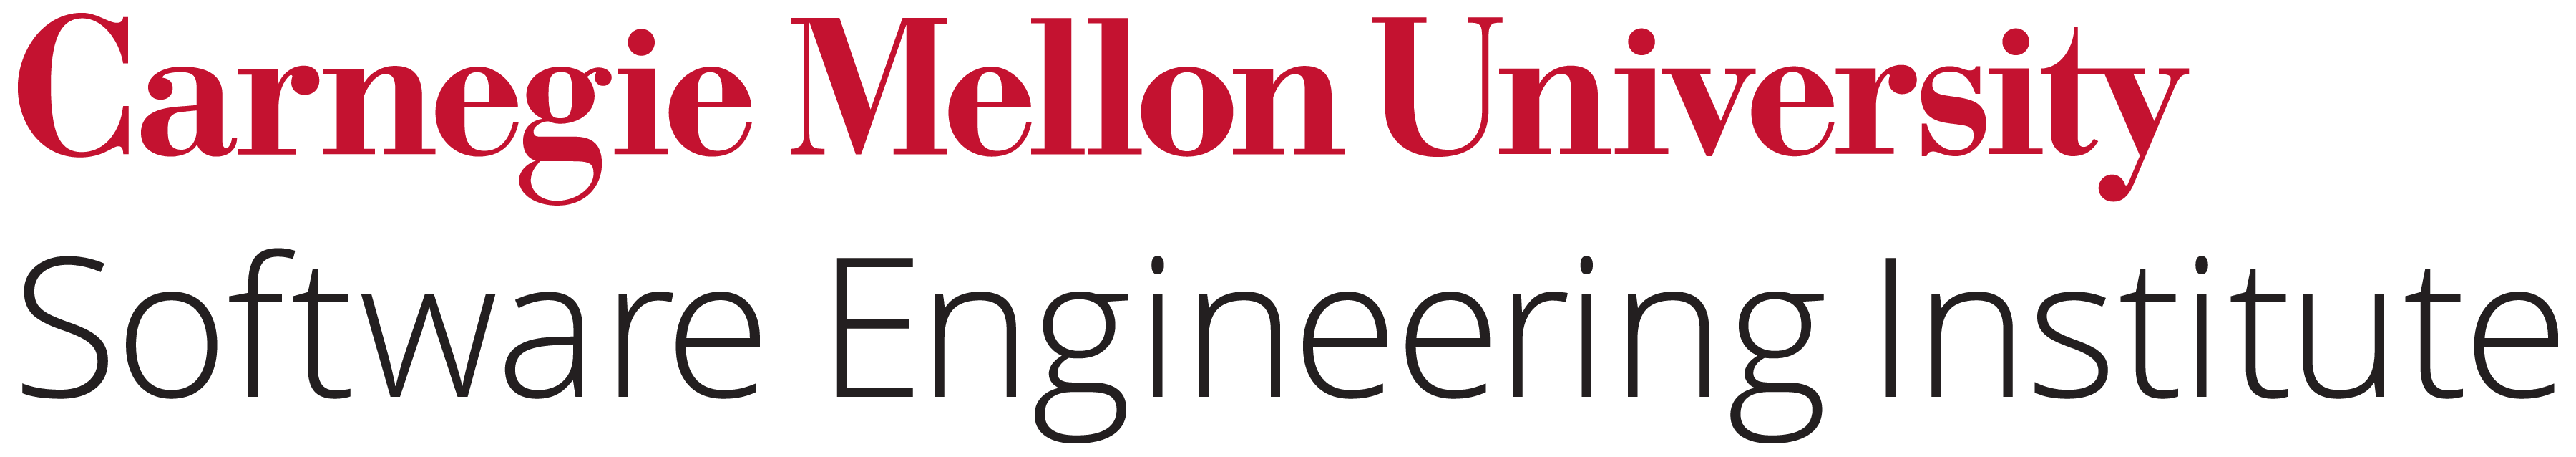 Carnegie Mellon University | Software Engineering Institute